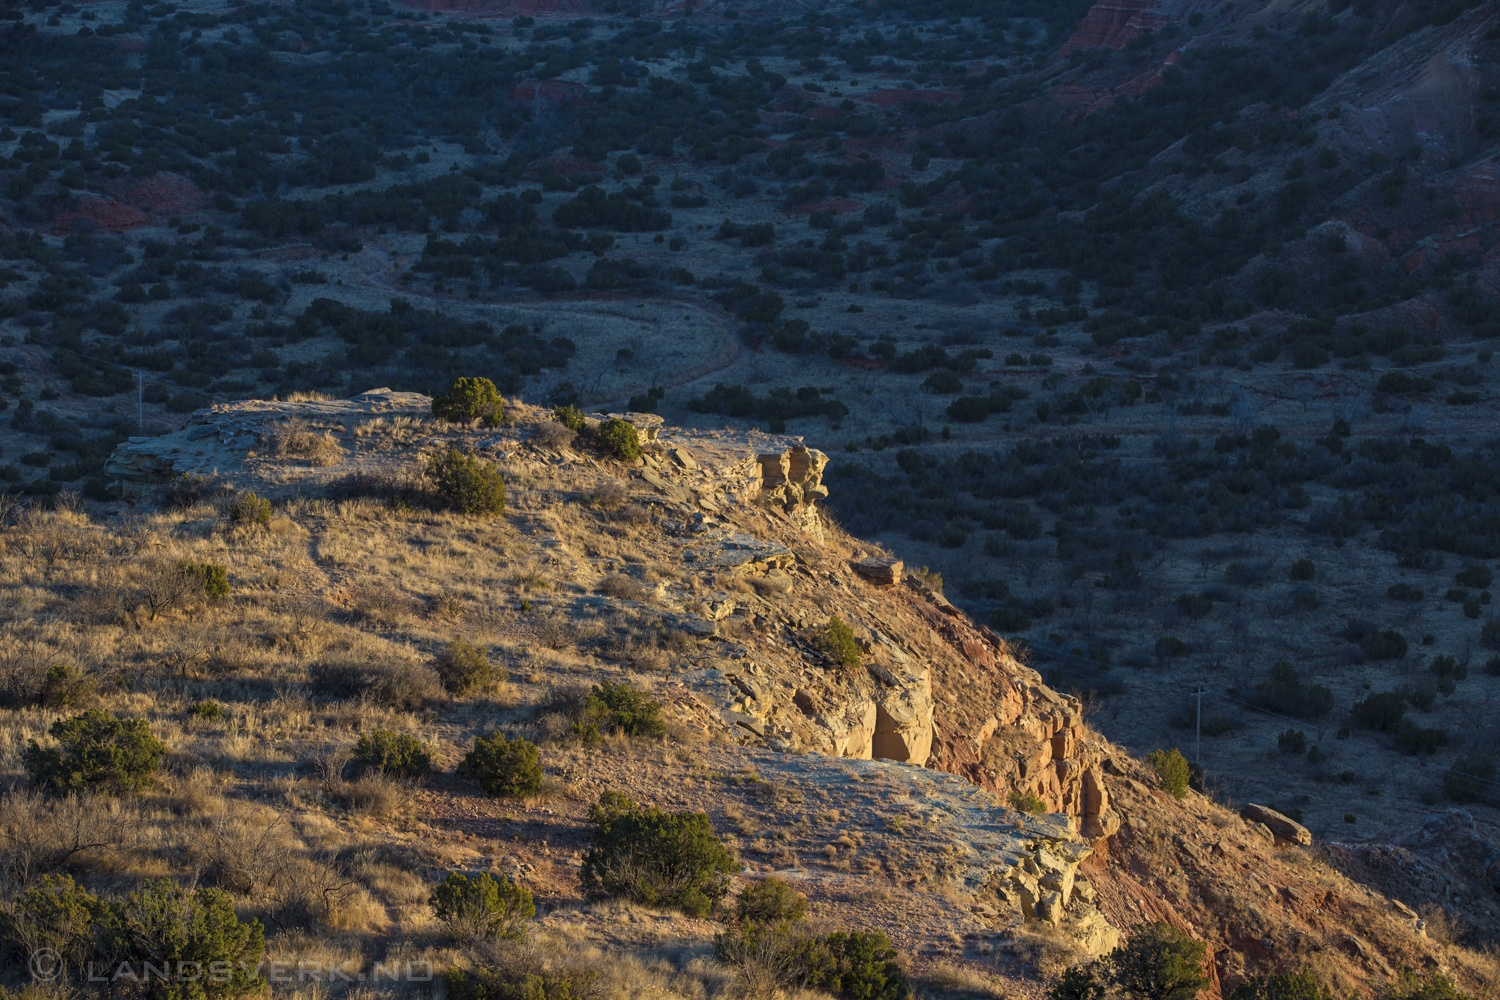 Palo Duro Canyon, Amarillo, Texas. 

(Canon EOS 5D Mark III / Canon EF 70-200mm f/2.8 L IS II USM)